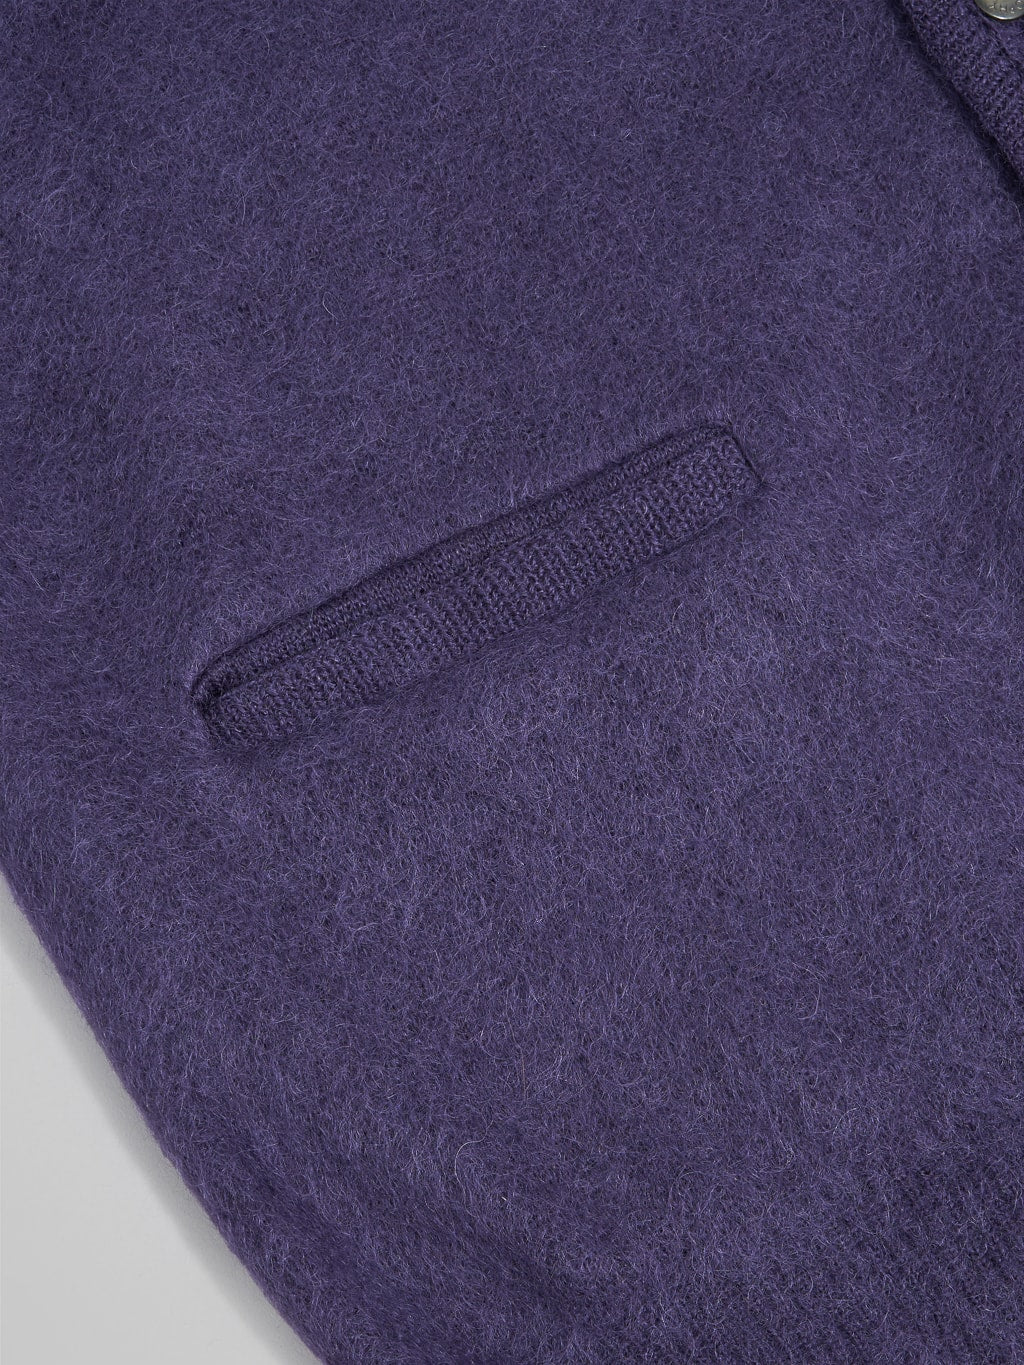 Trophy Clothing Mohair Knit Cardigan Dark Purple fabric